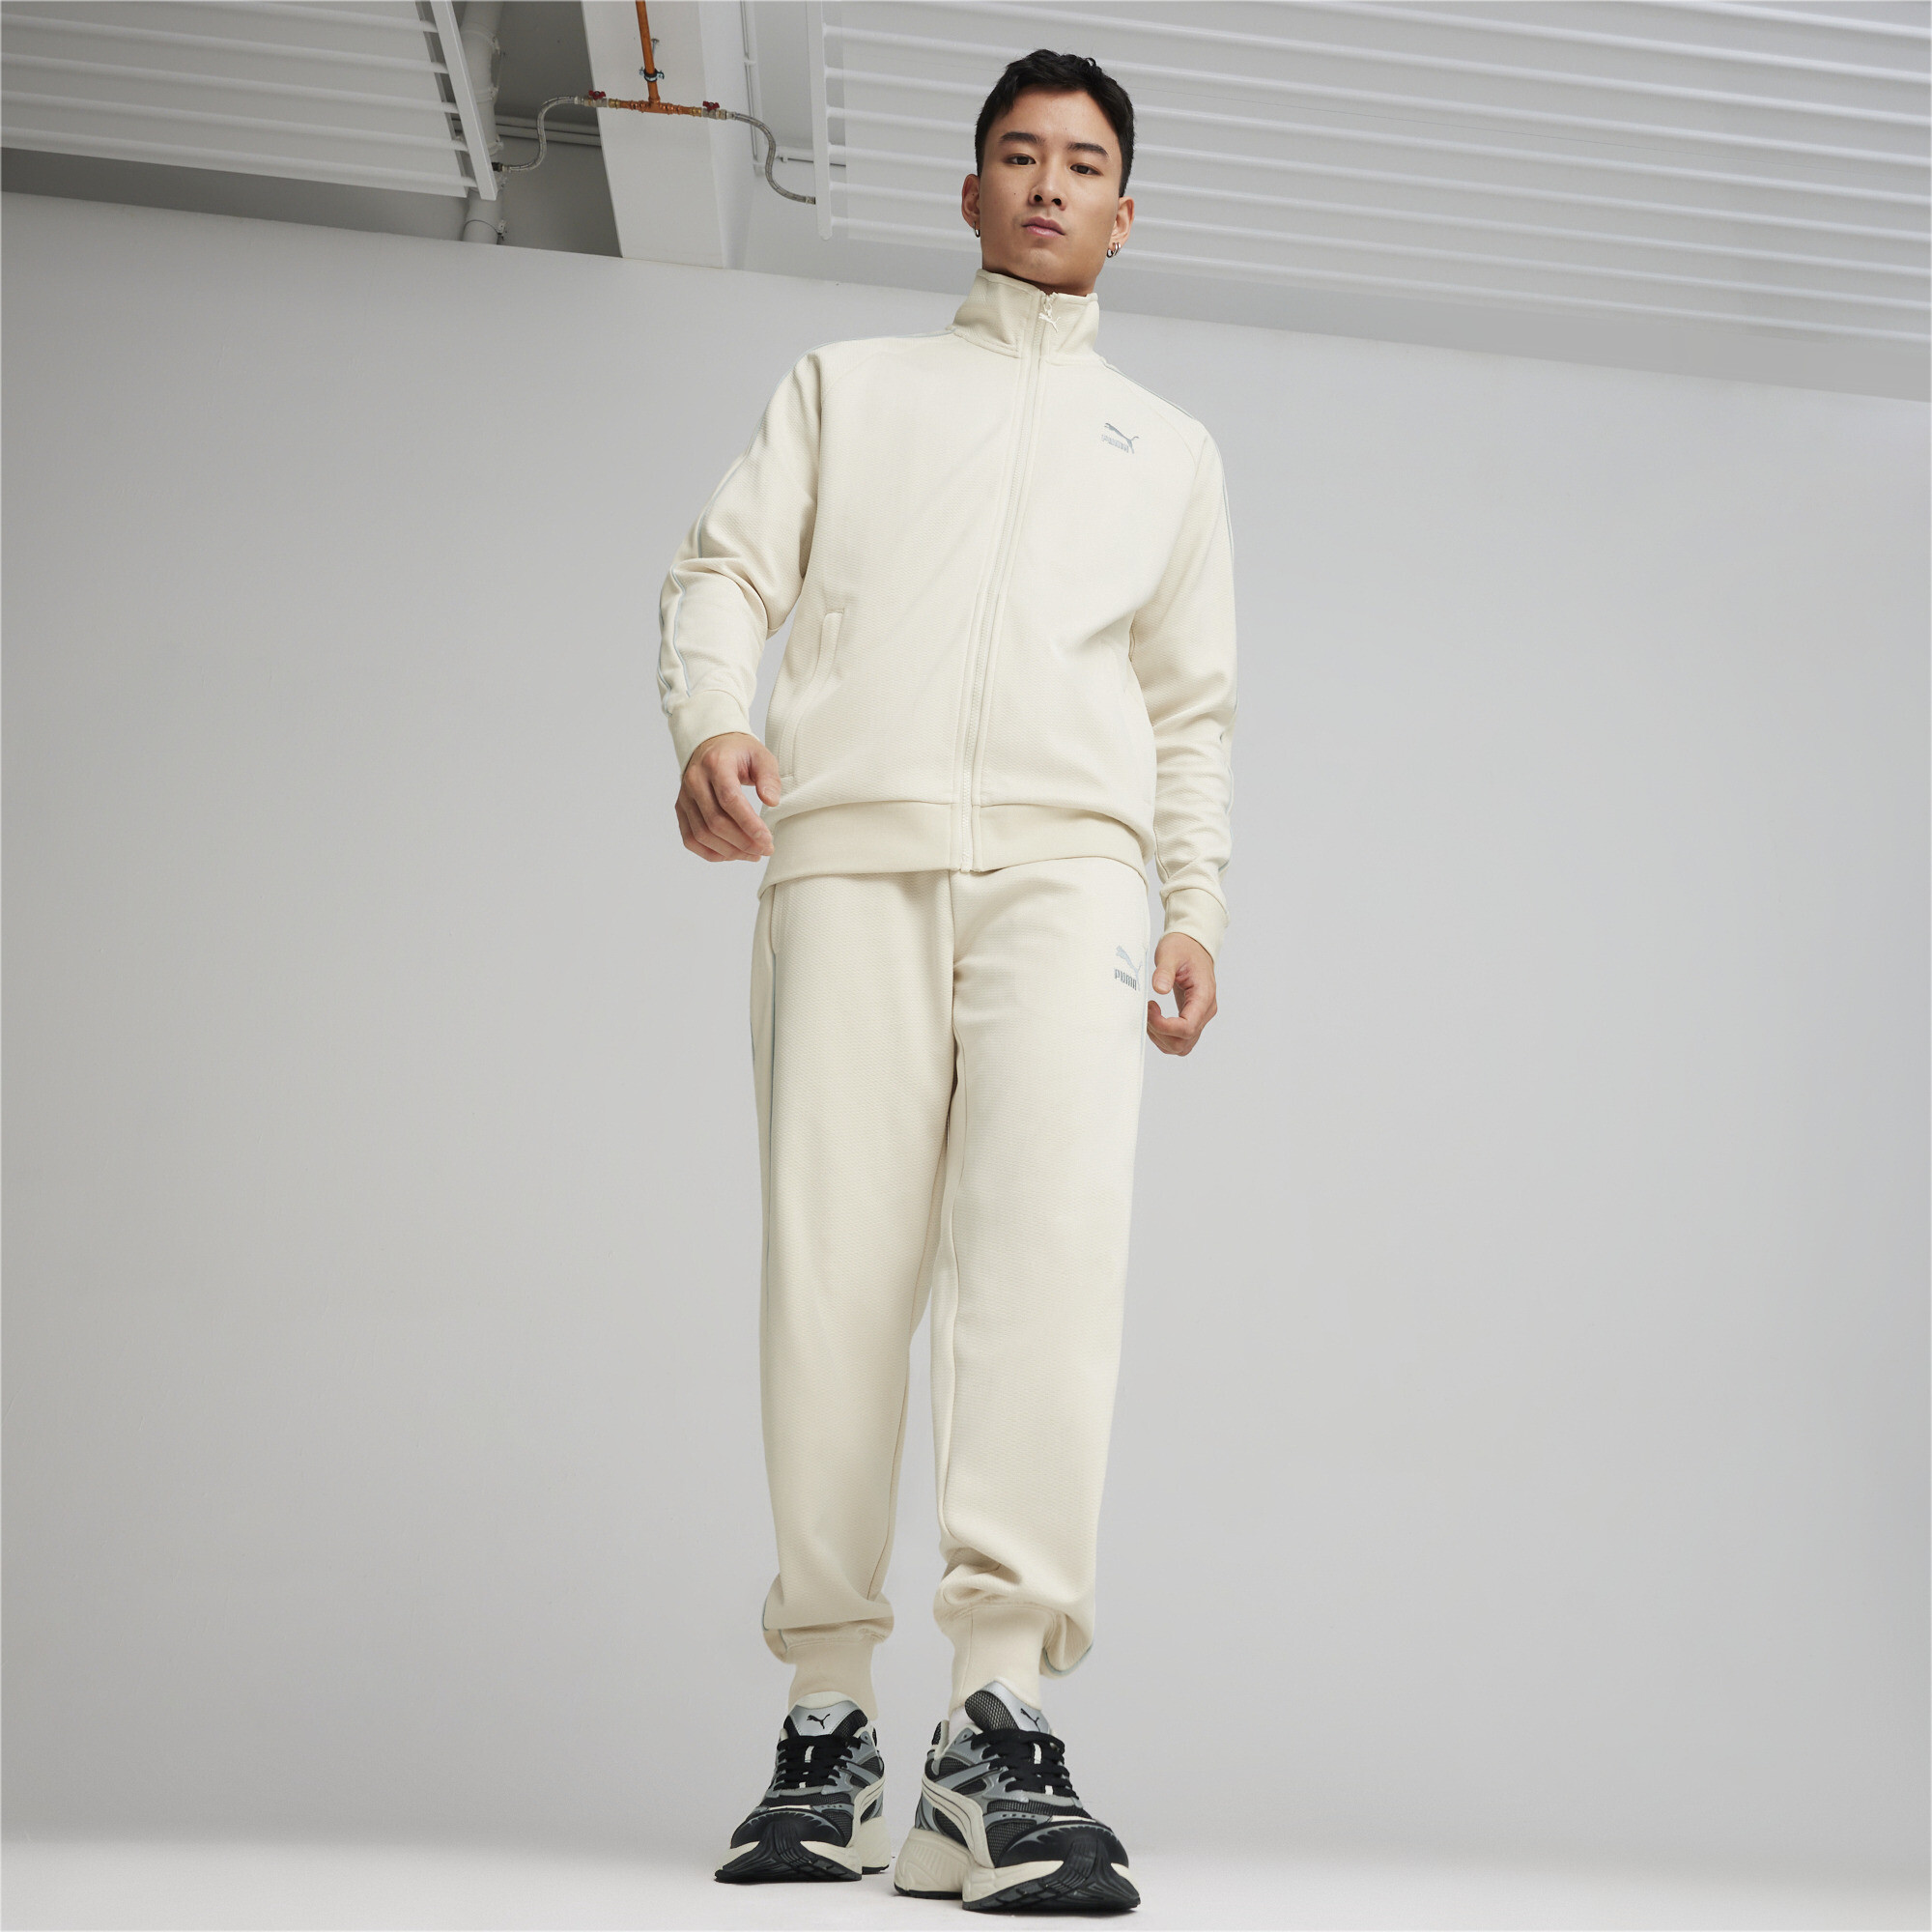 Men's Puma T7's Track Pants, White, Size XXL, Clothing